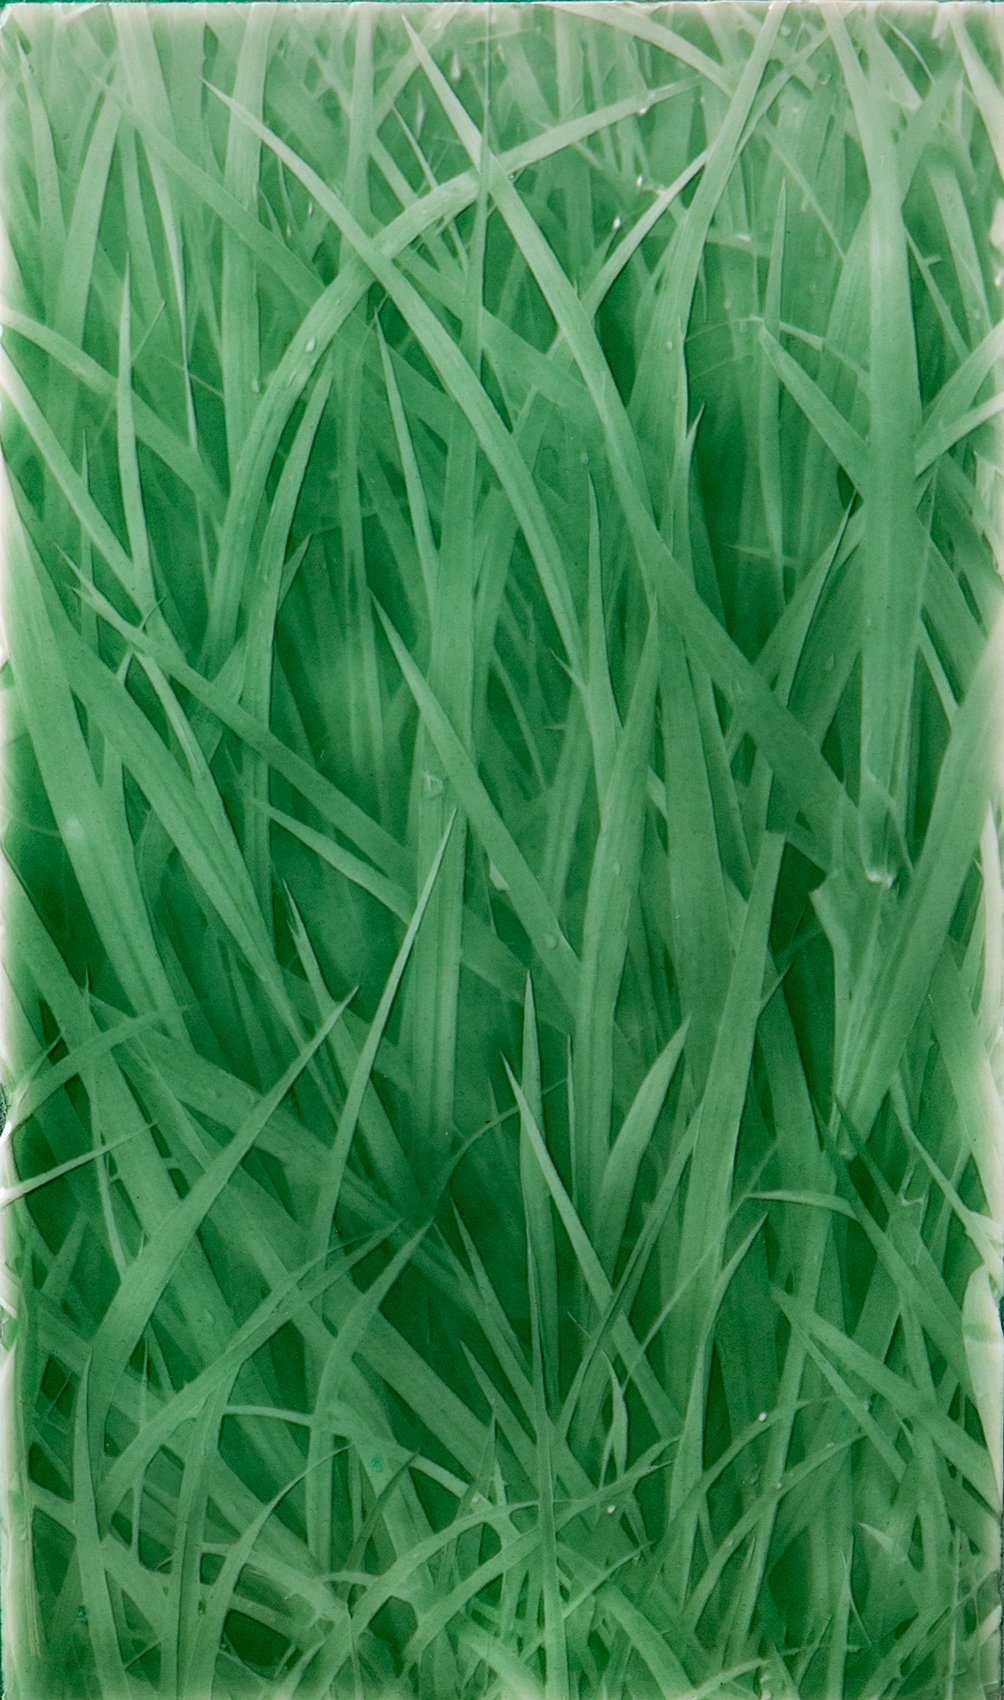 Biophilic Bathroom Design Lush Grass Tile